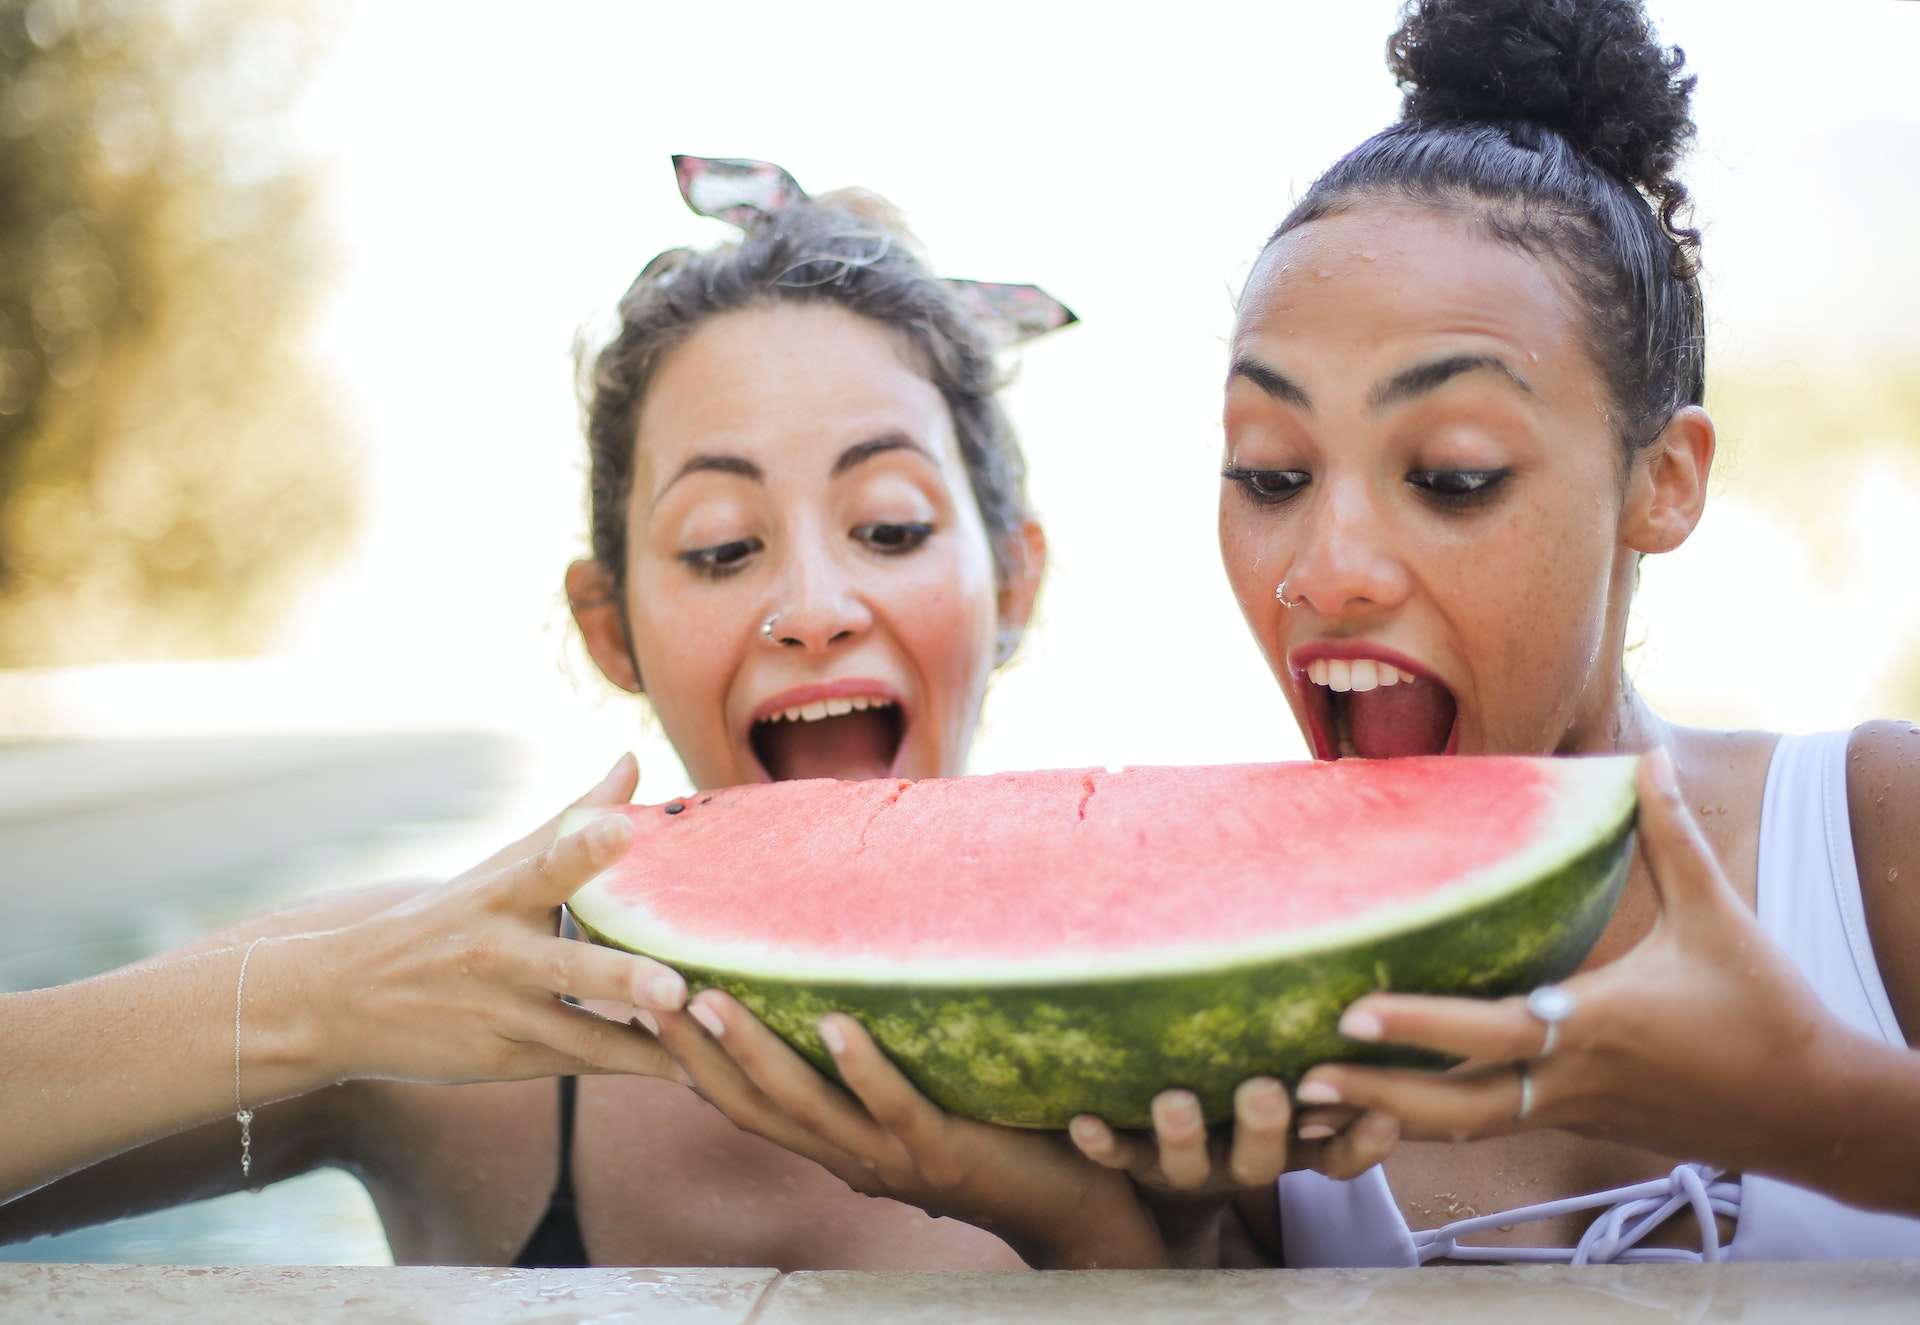 Photo Of Women Eating Watermelon